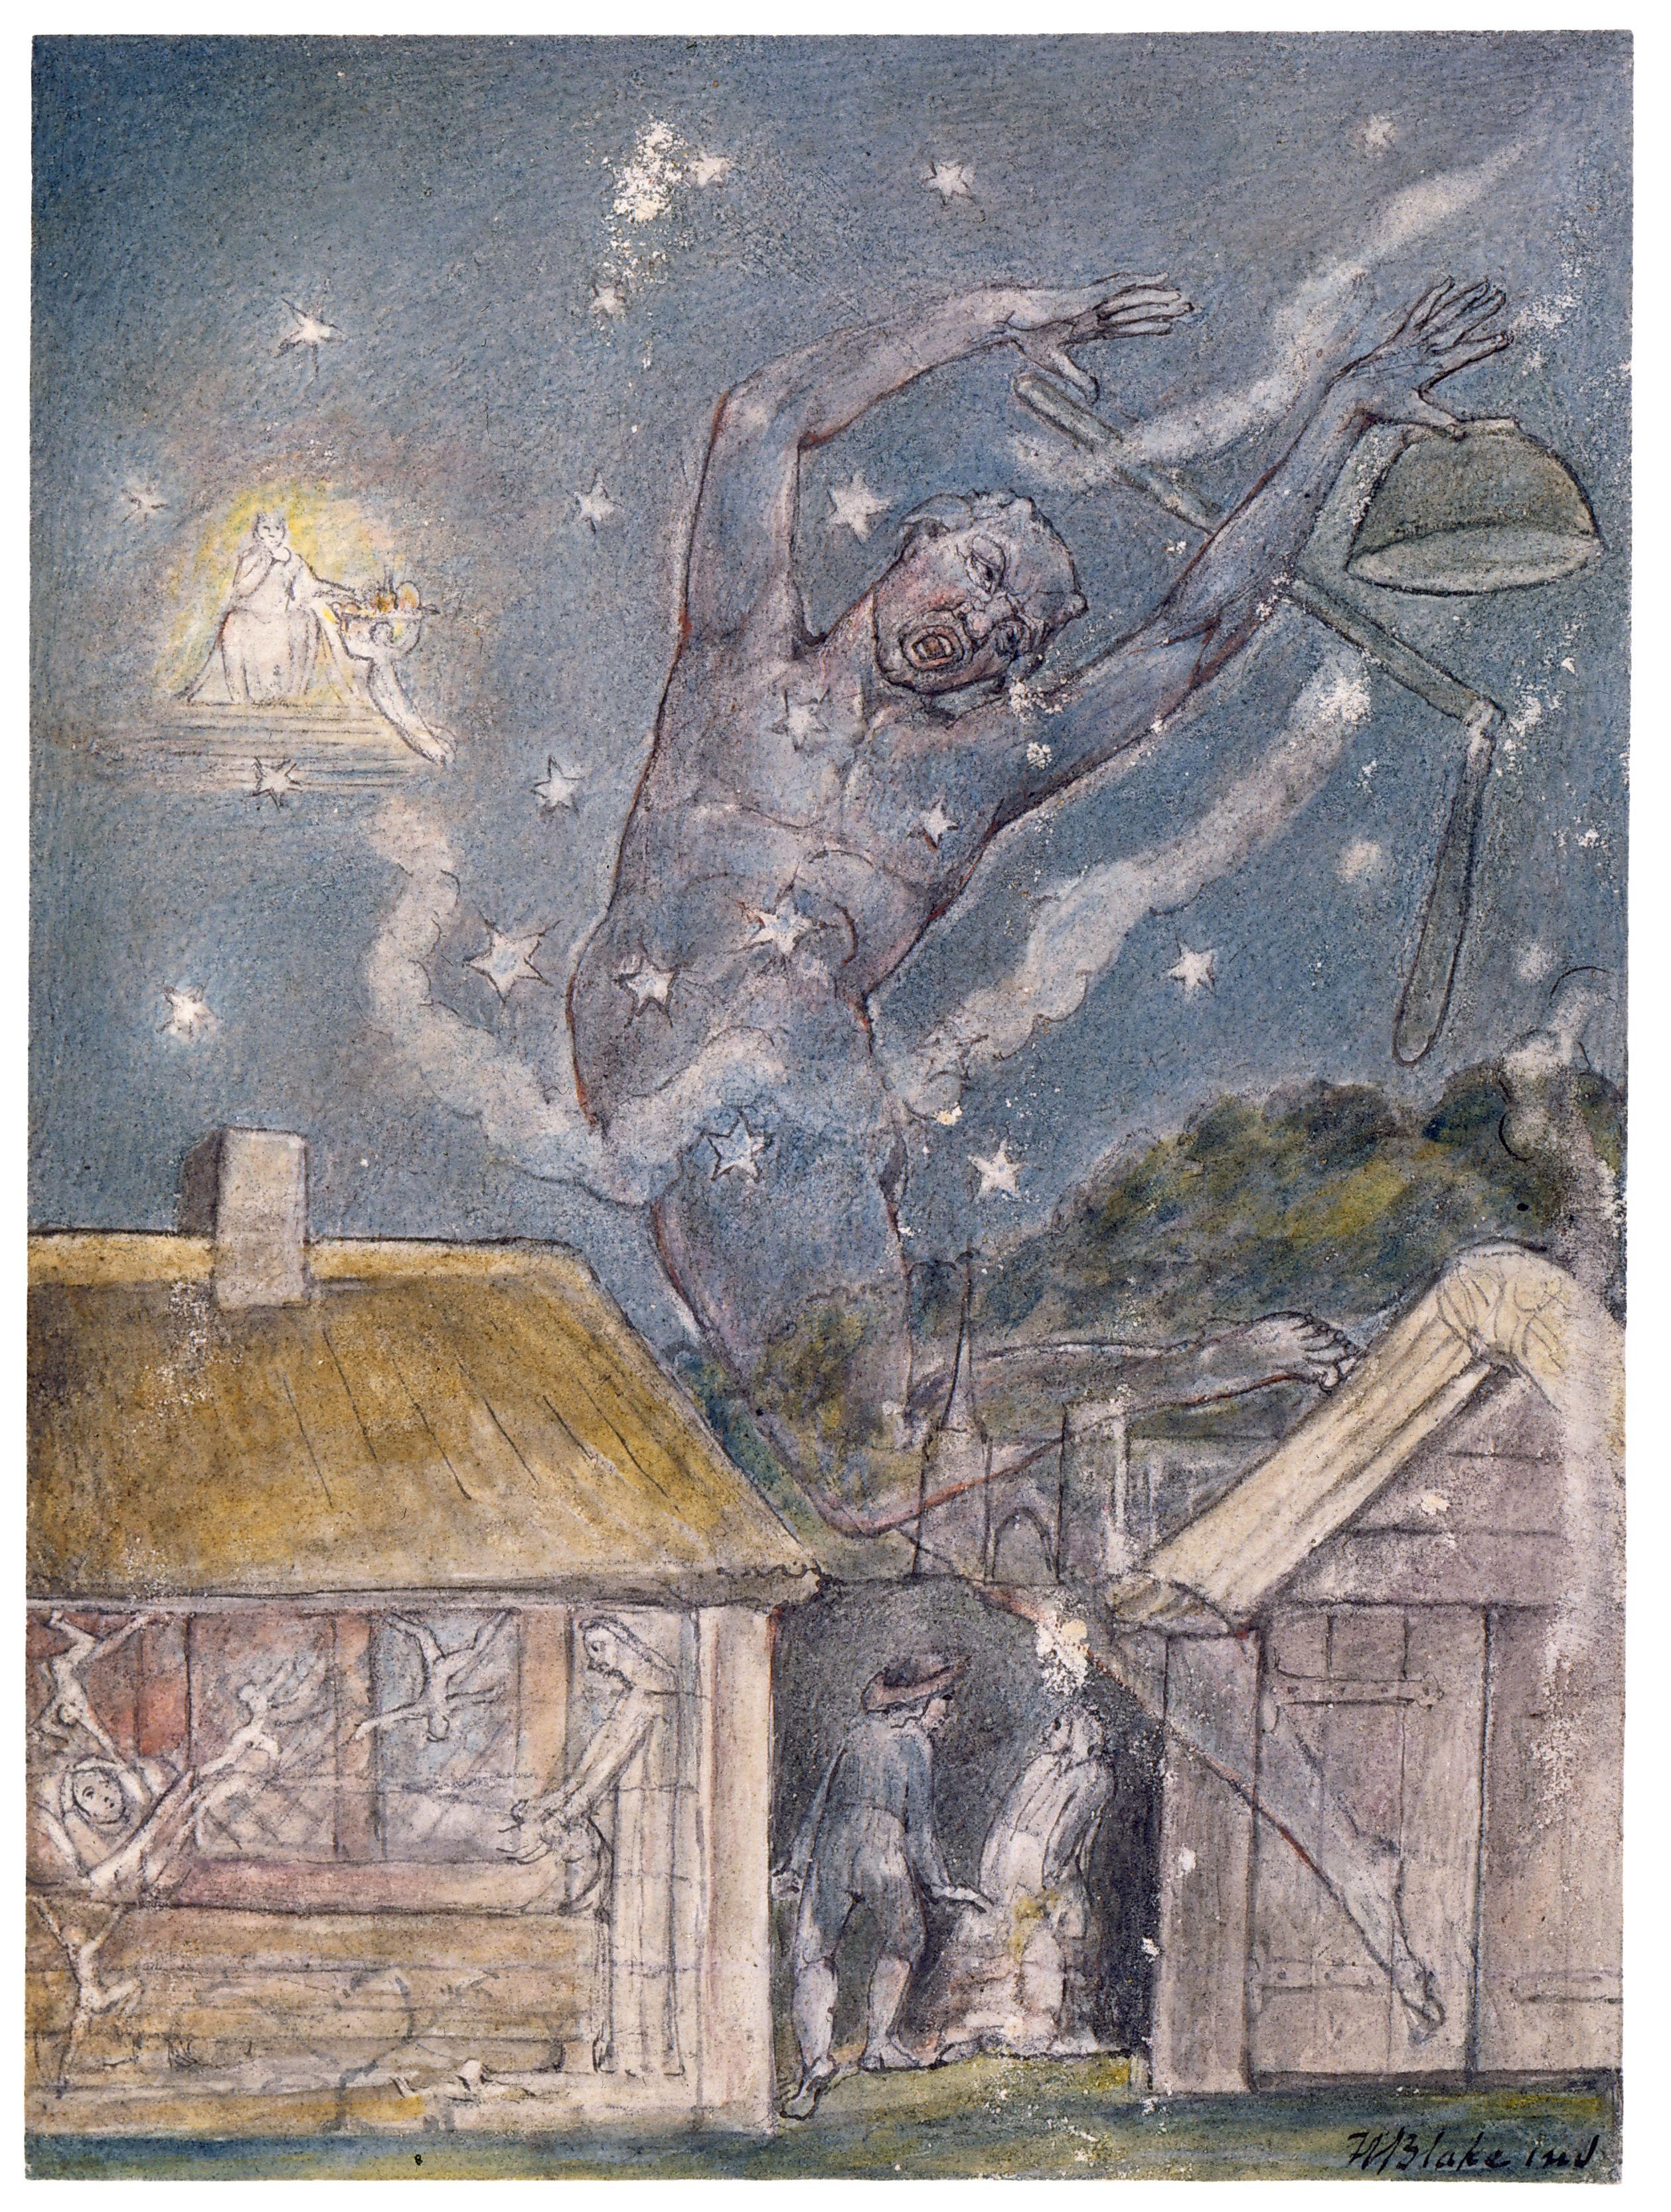 The Goblin, 1816 1820 William Blake